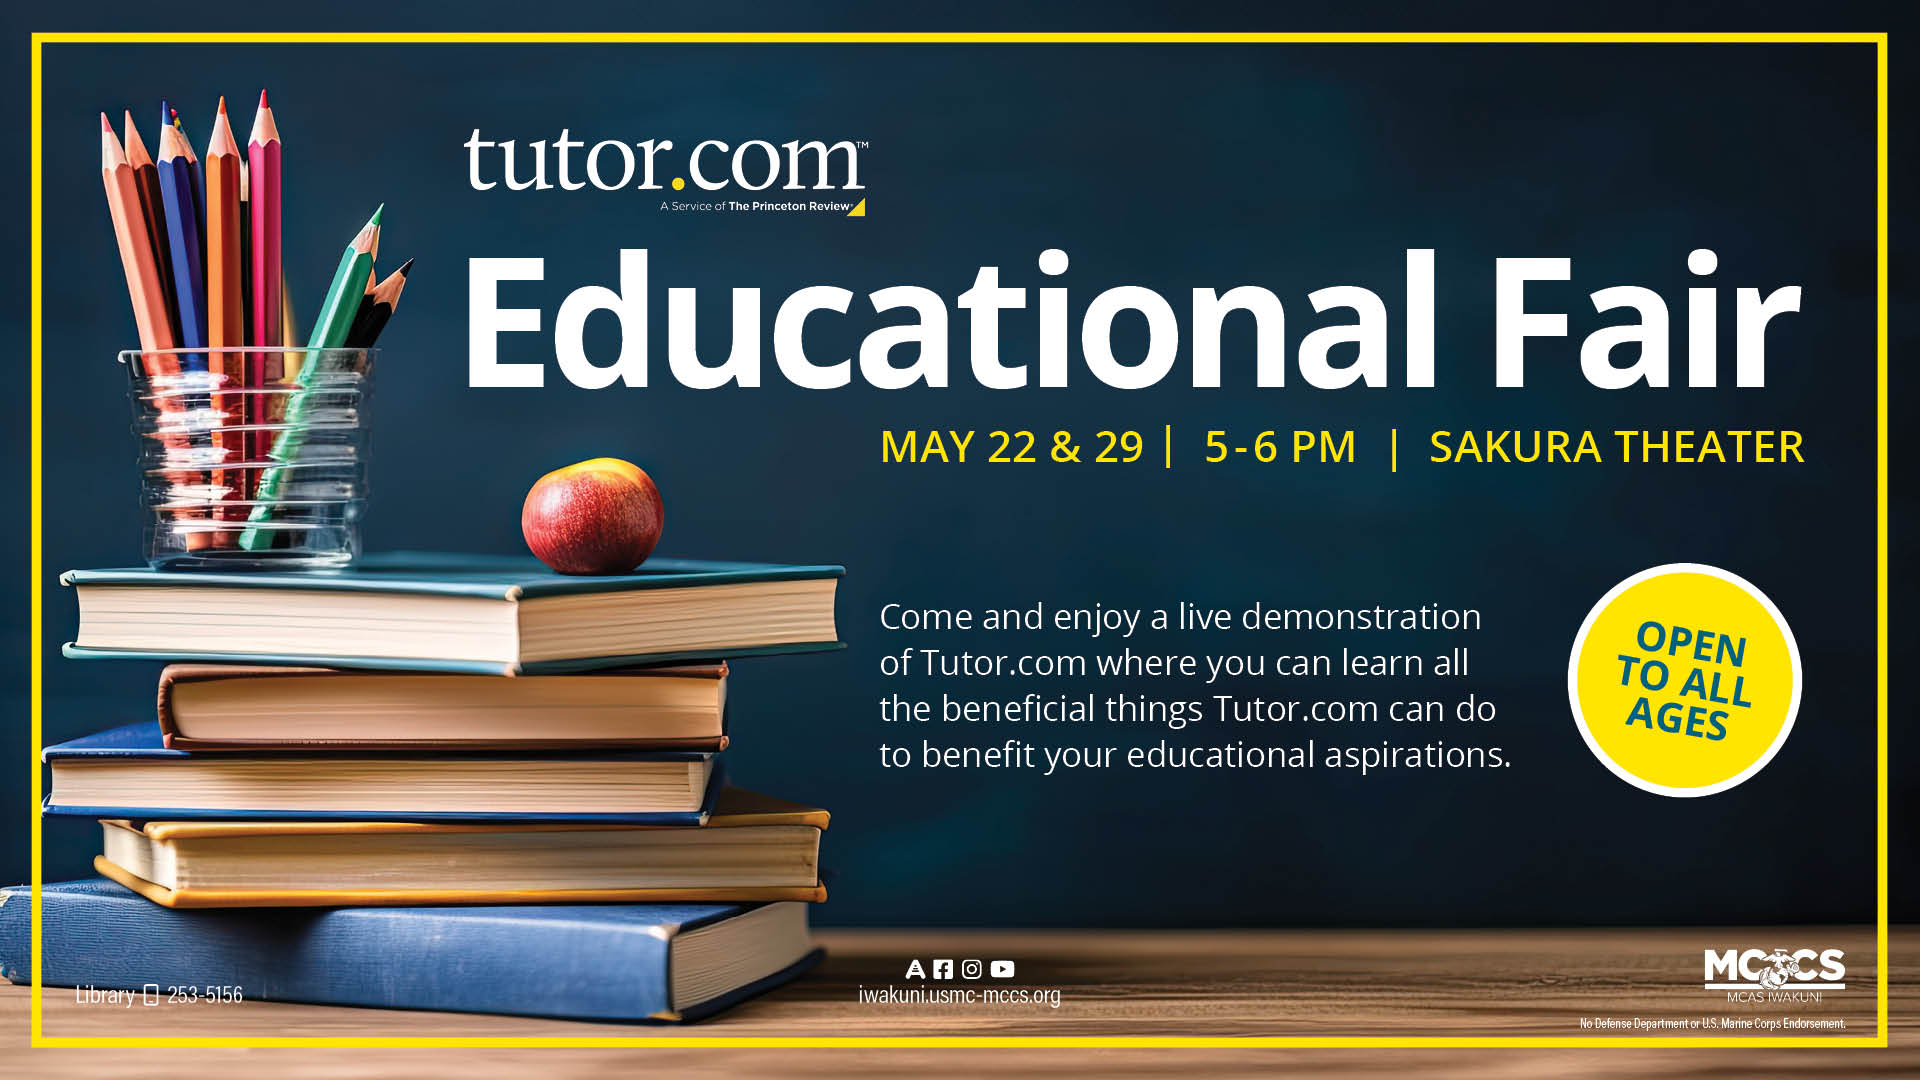 Tutor.com Educational Fair